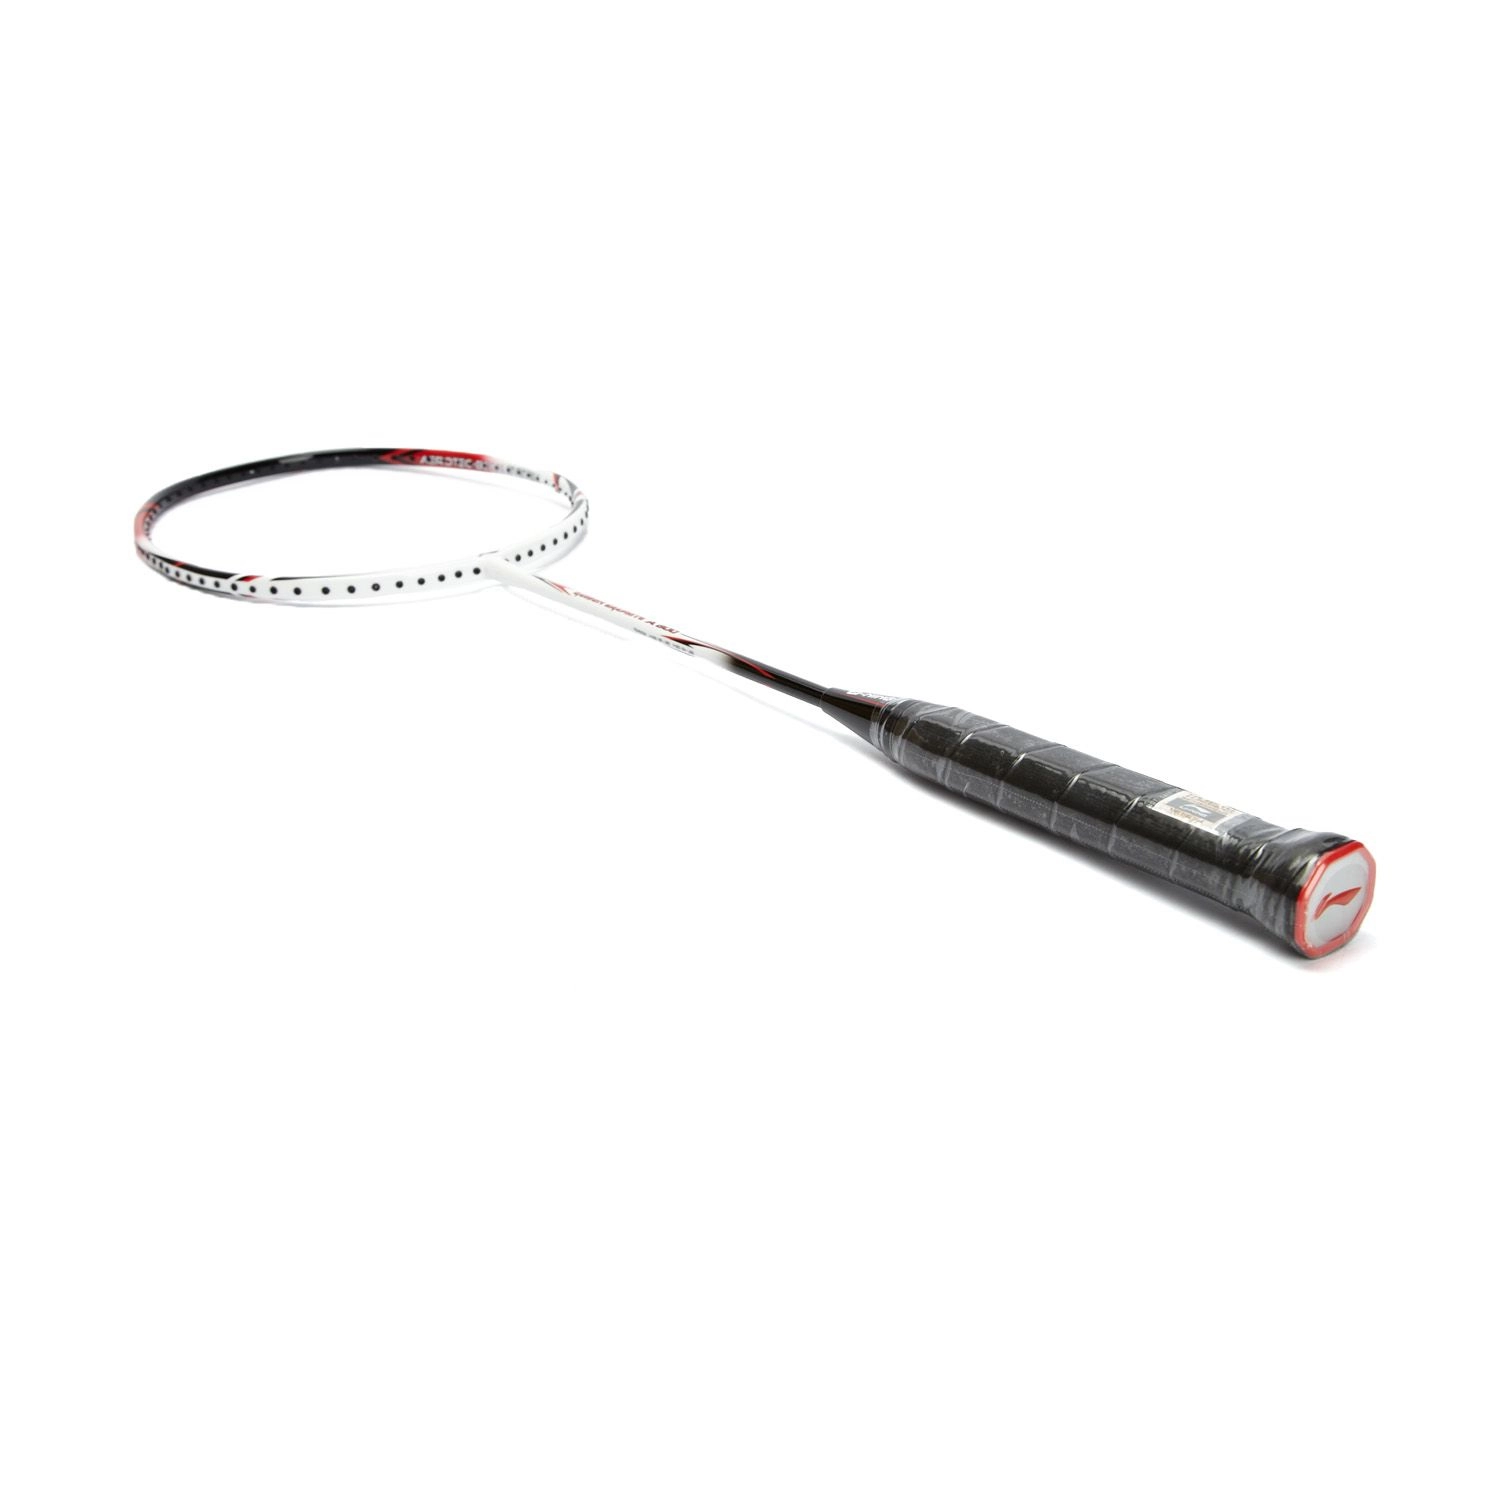 Li-Ning Carbon Graphite A800 Badminton Racket 